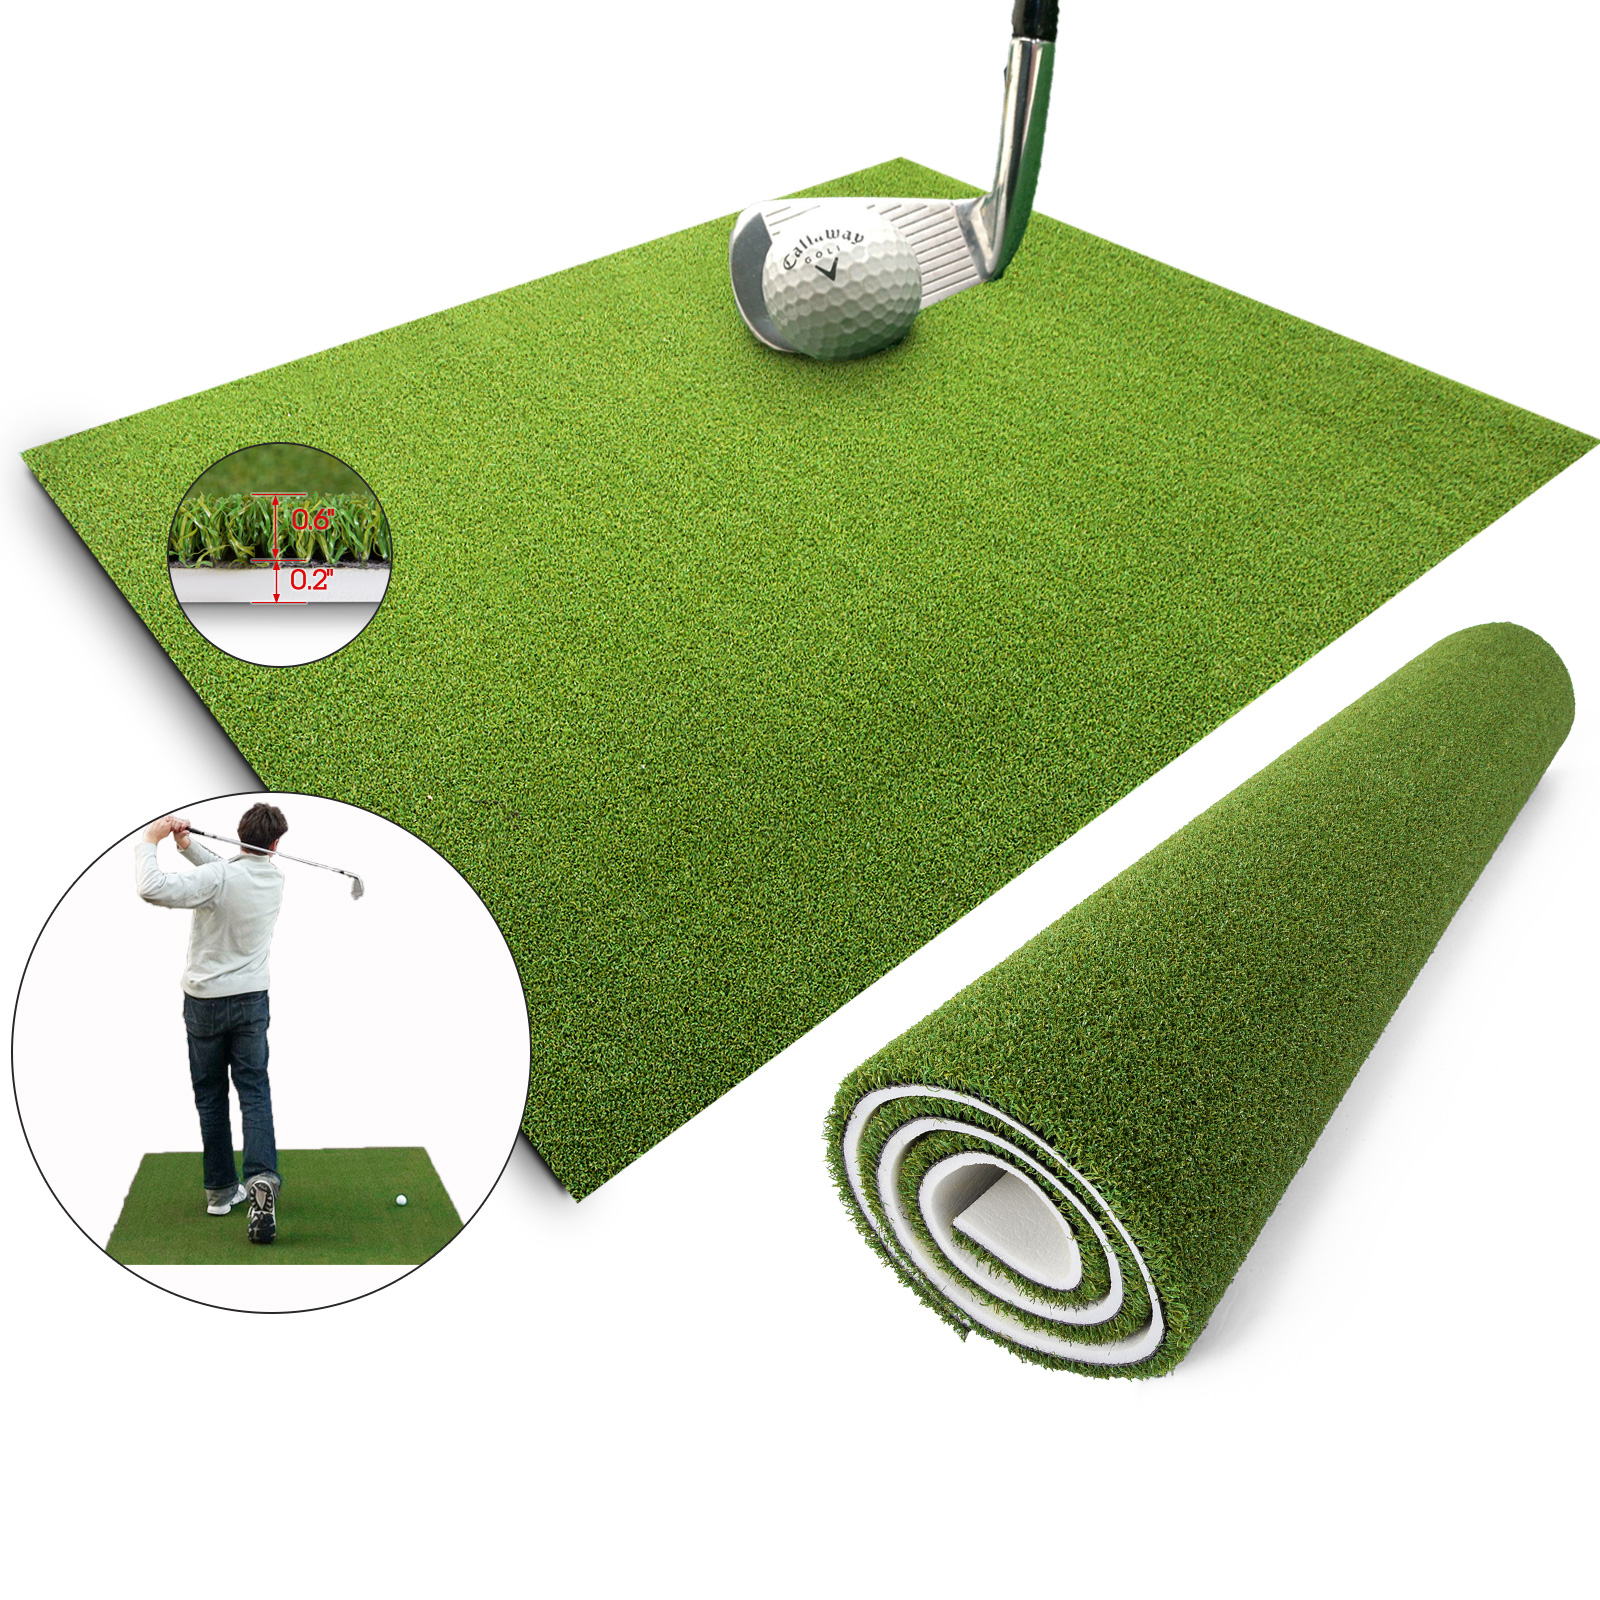 Fairway Golf Chipping Driving Range Commercial Practice Pro Hitting Mat eBay